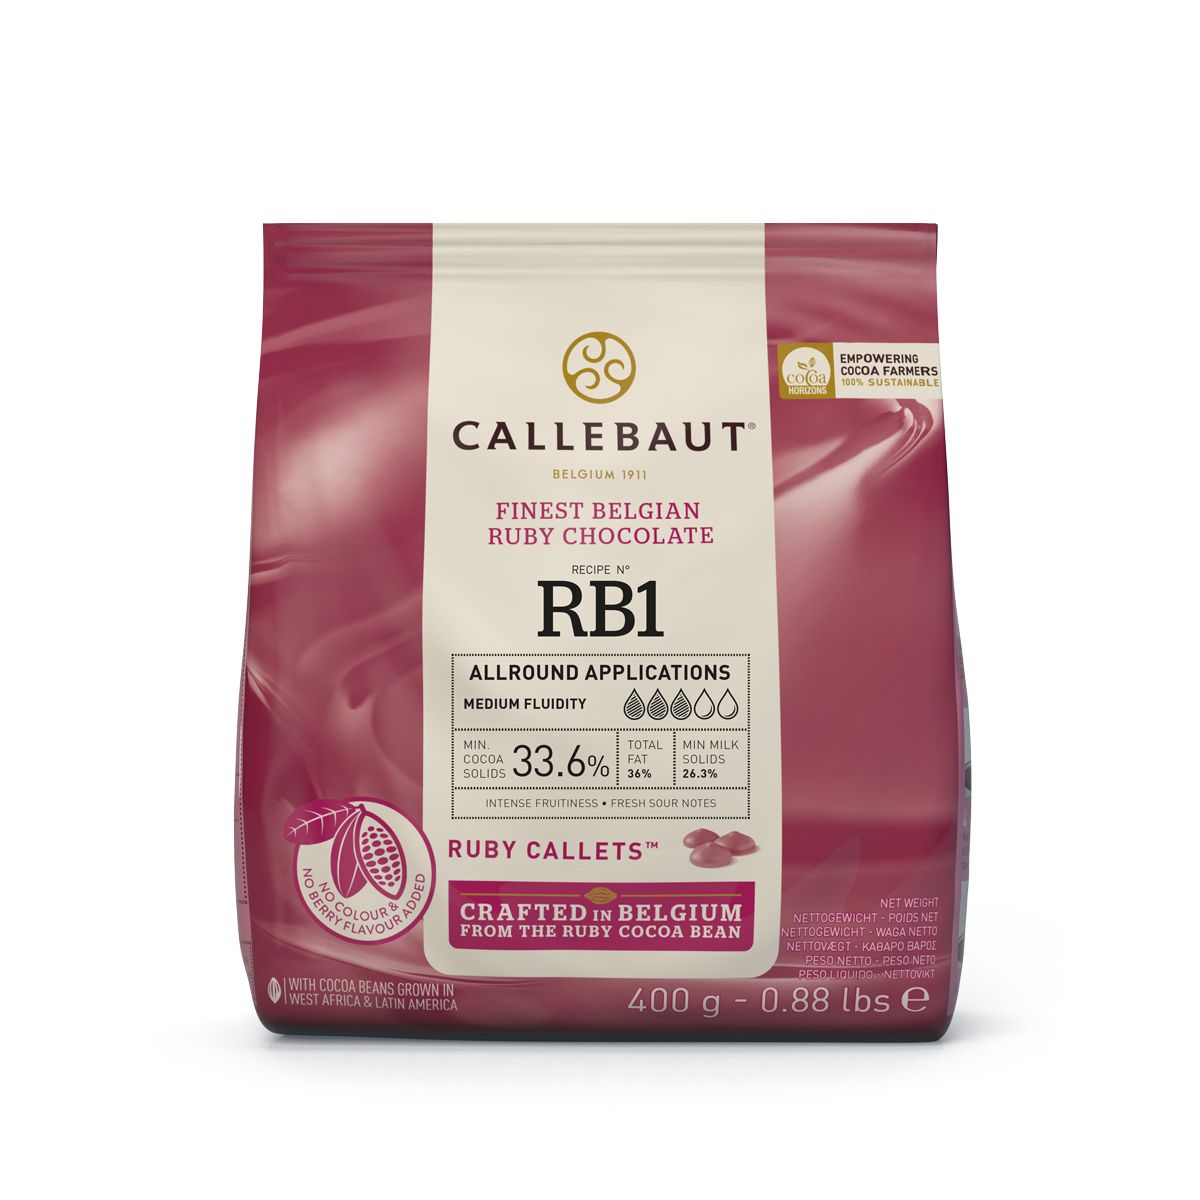 Callebaut Callets 400g  Ruby 